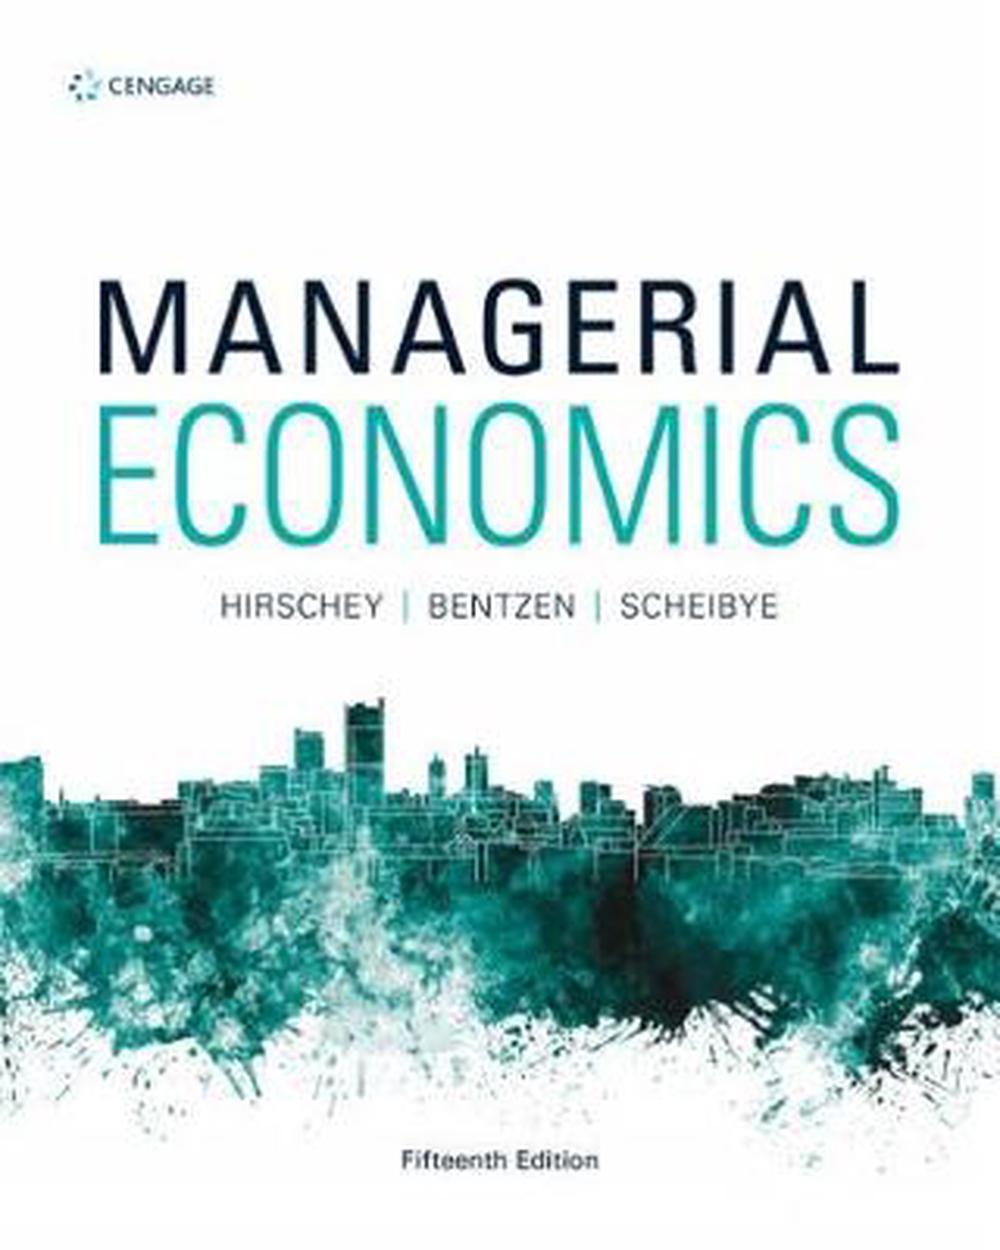 managerial economics research topics